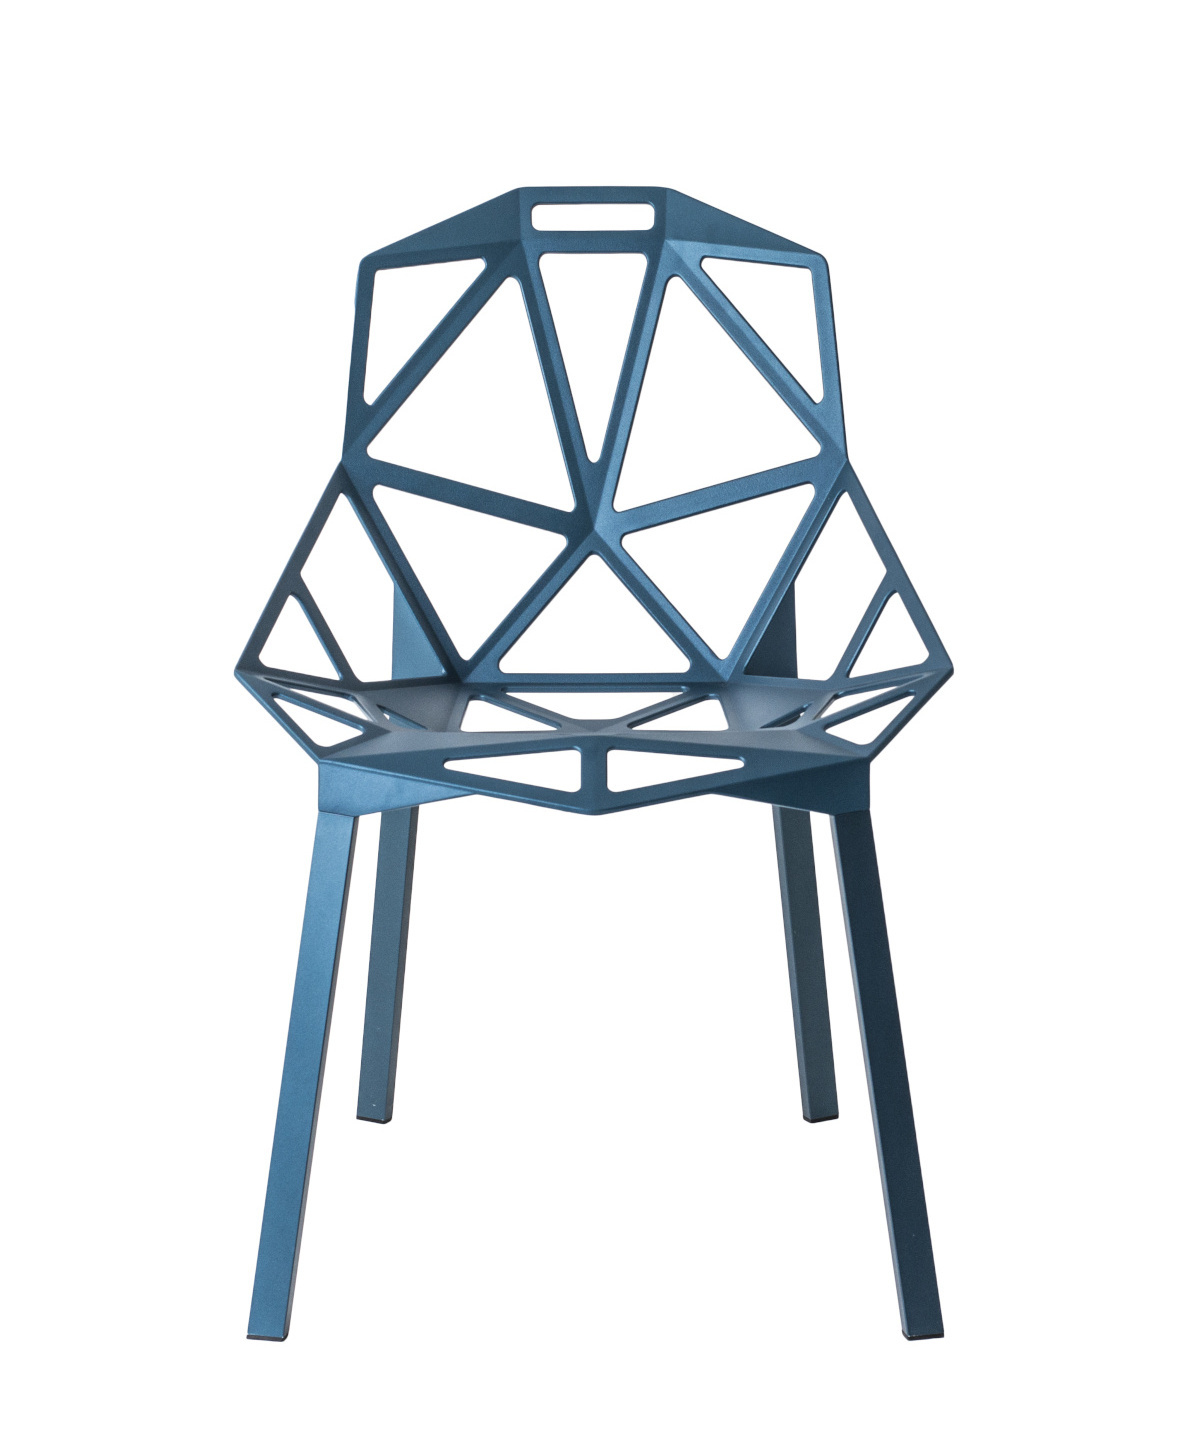 Chair One Stapelstuhl, blau